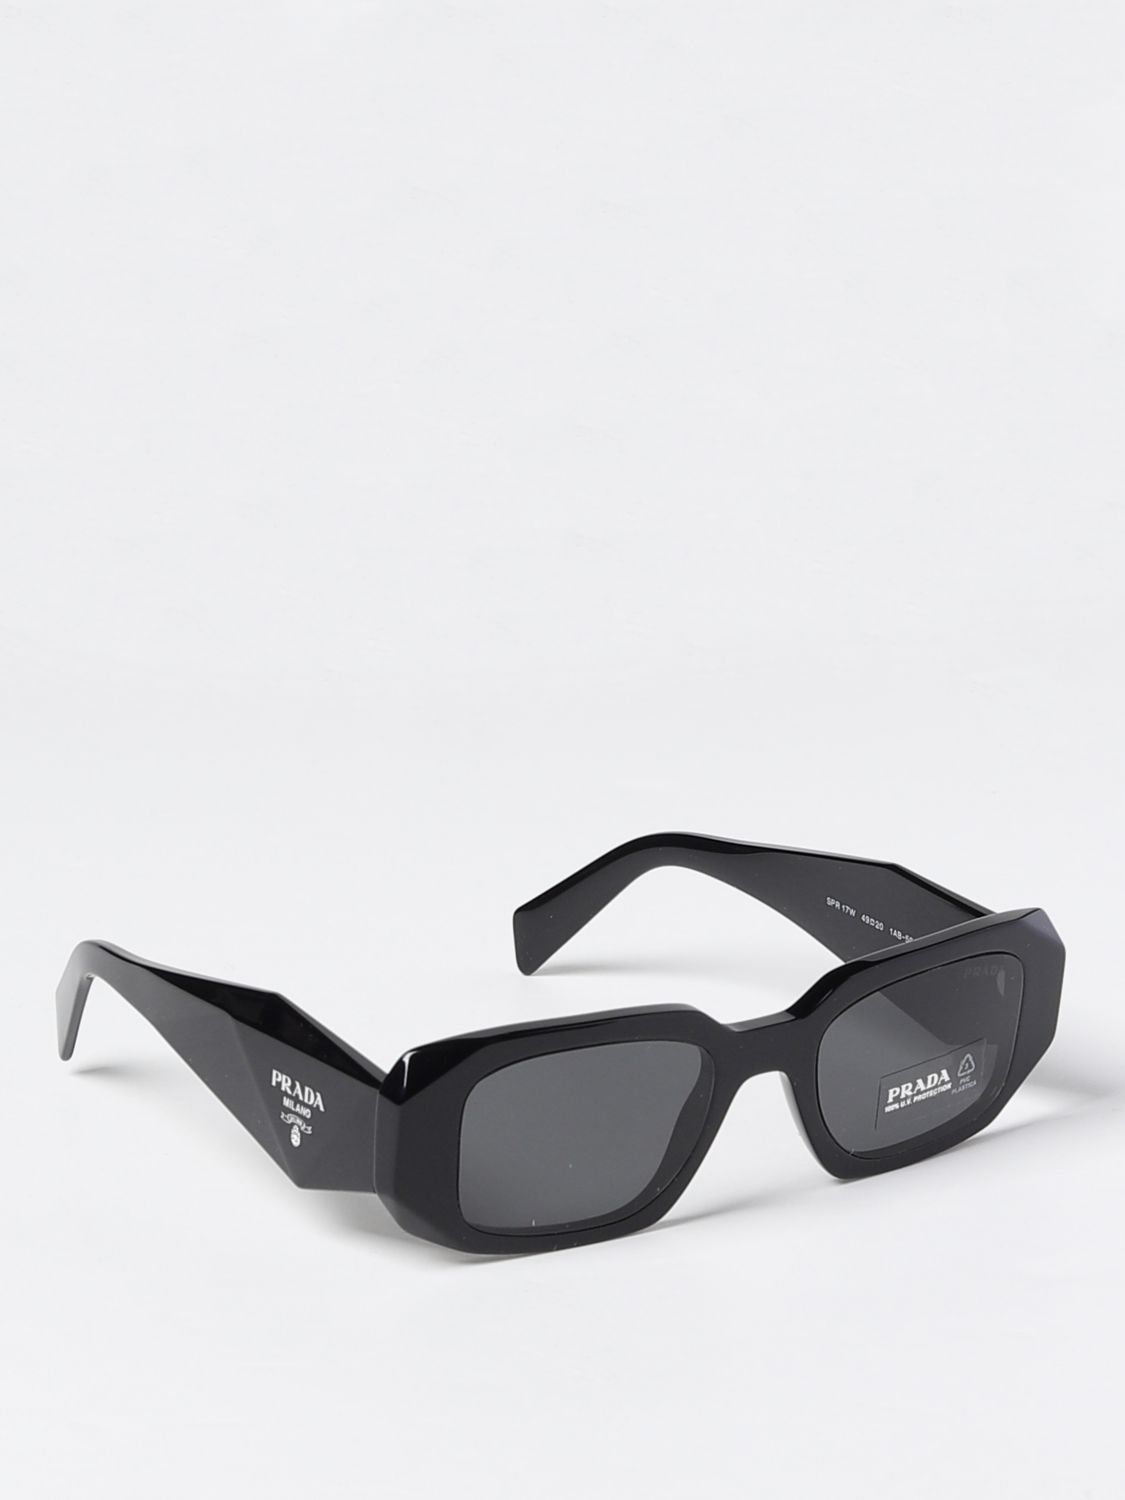 Buy Prada Sunglasses Online Dubai Optics Online